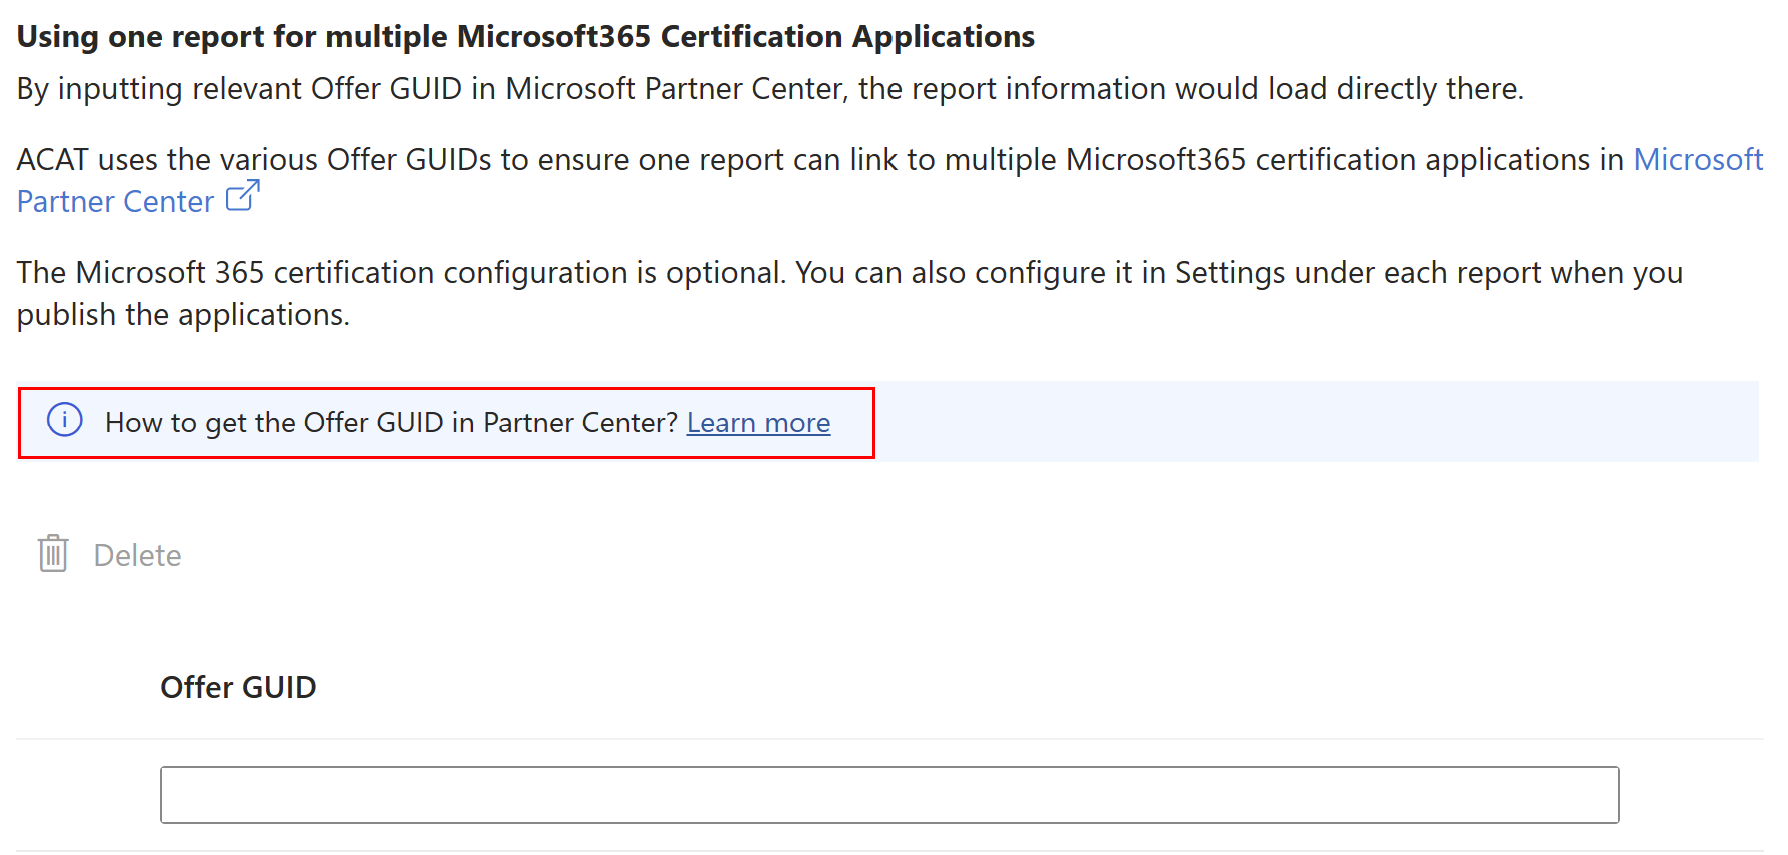 Microsoft 365 Certification configuration